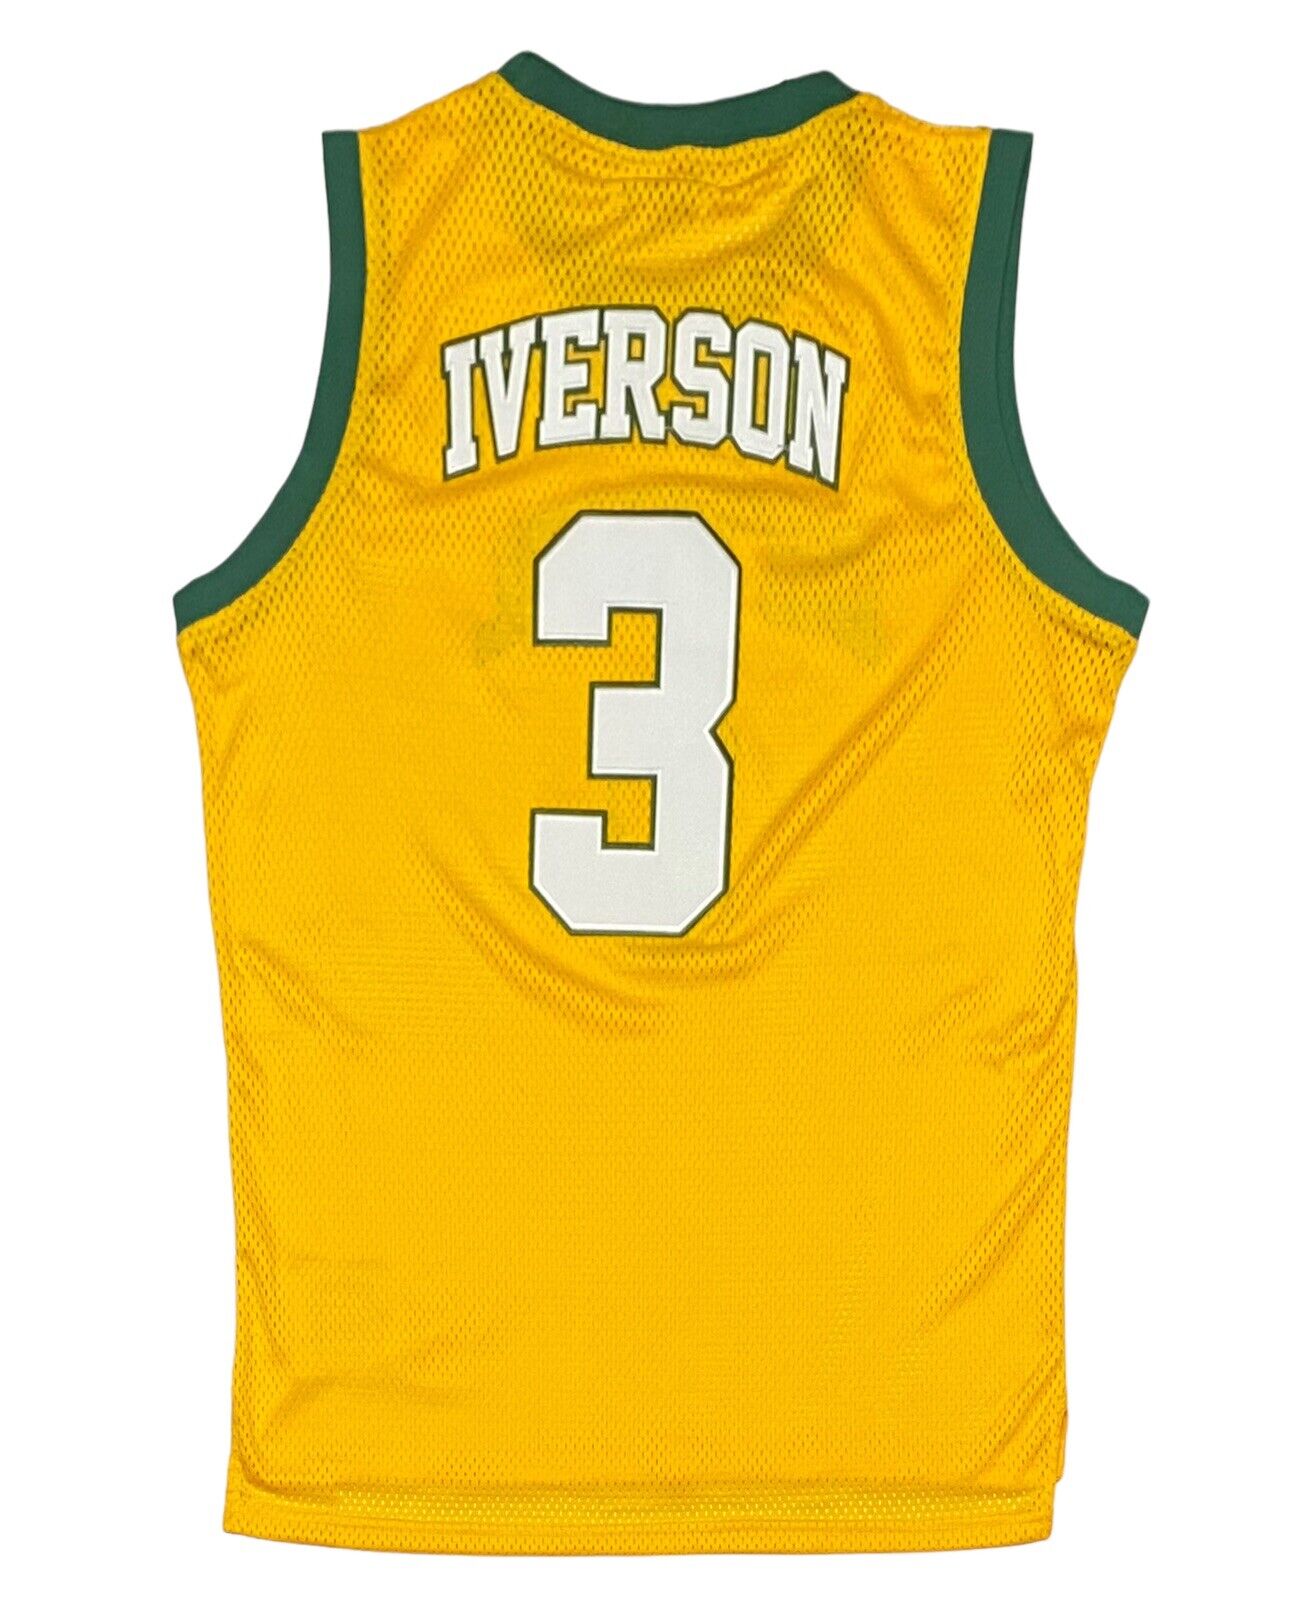 NEW AUTHENTIC Allen IVERSON Bethel High School  Basketball Throwback Jersey Sz L